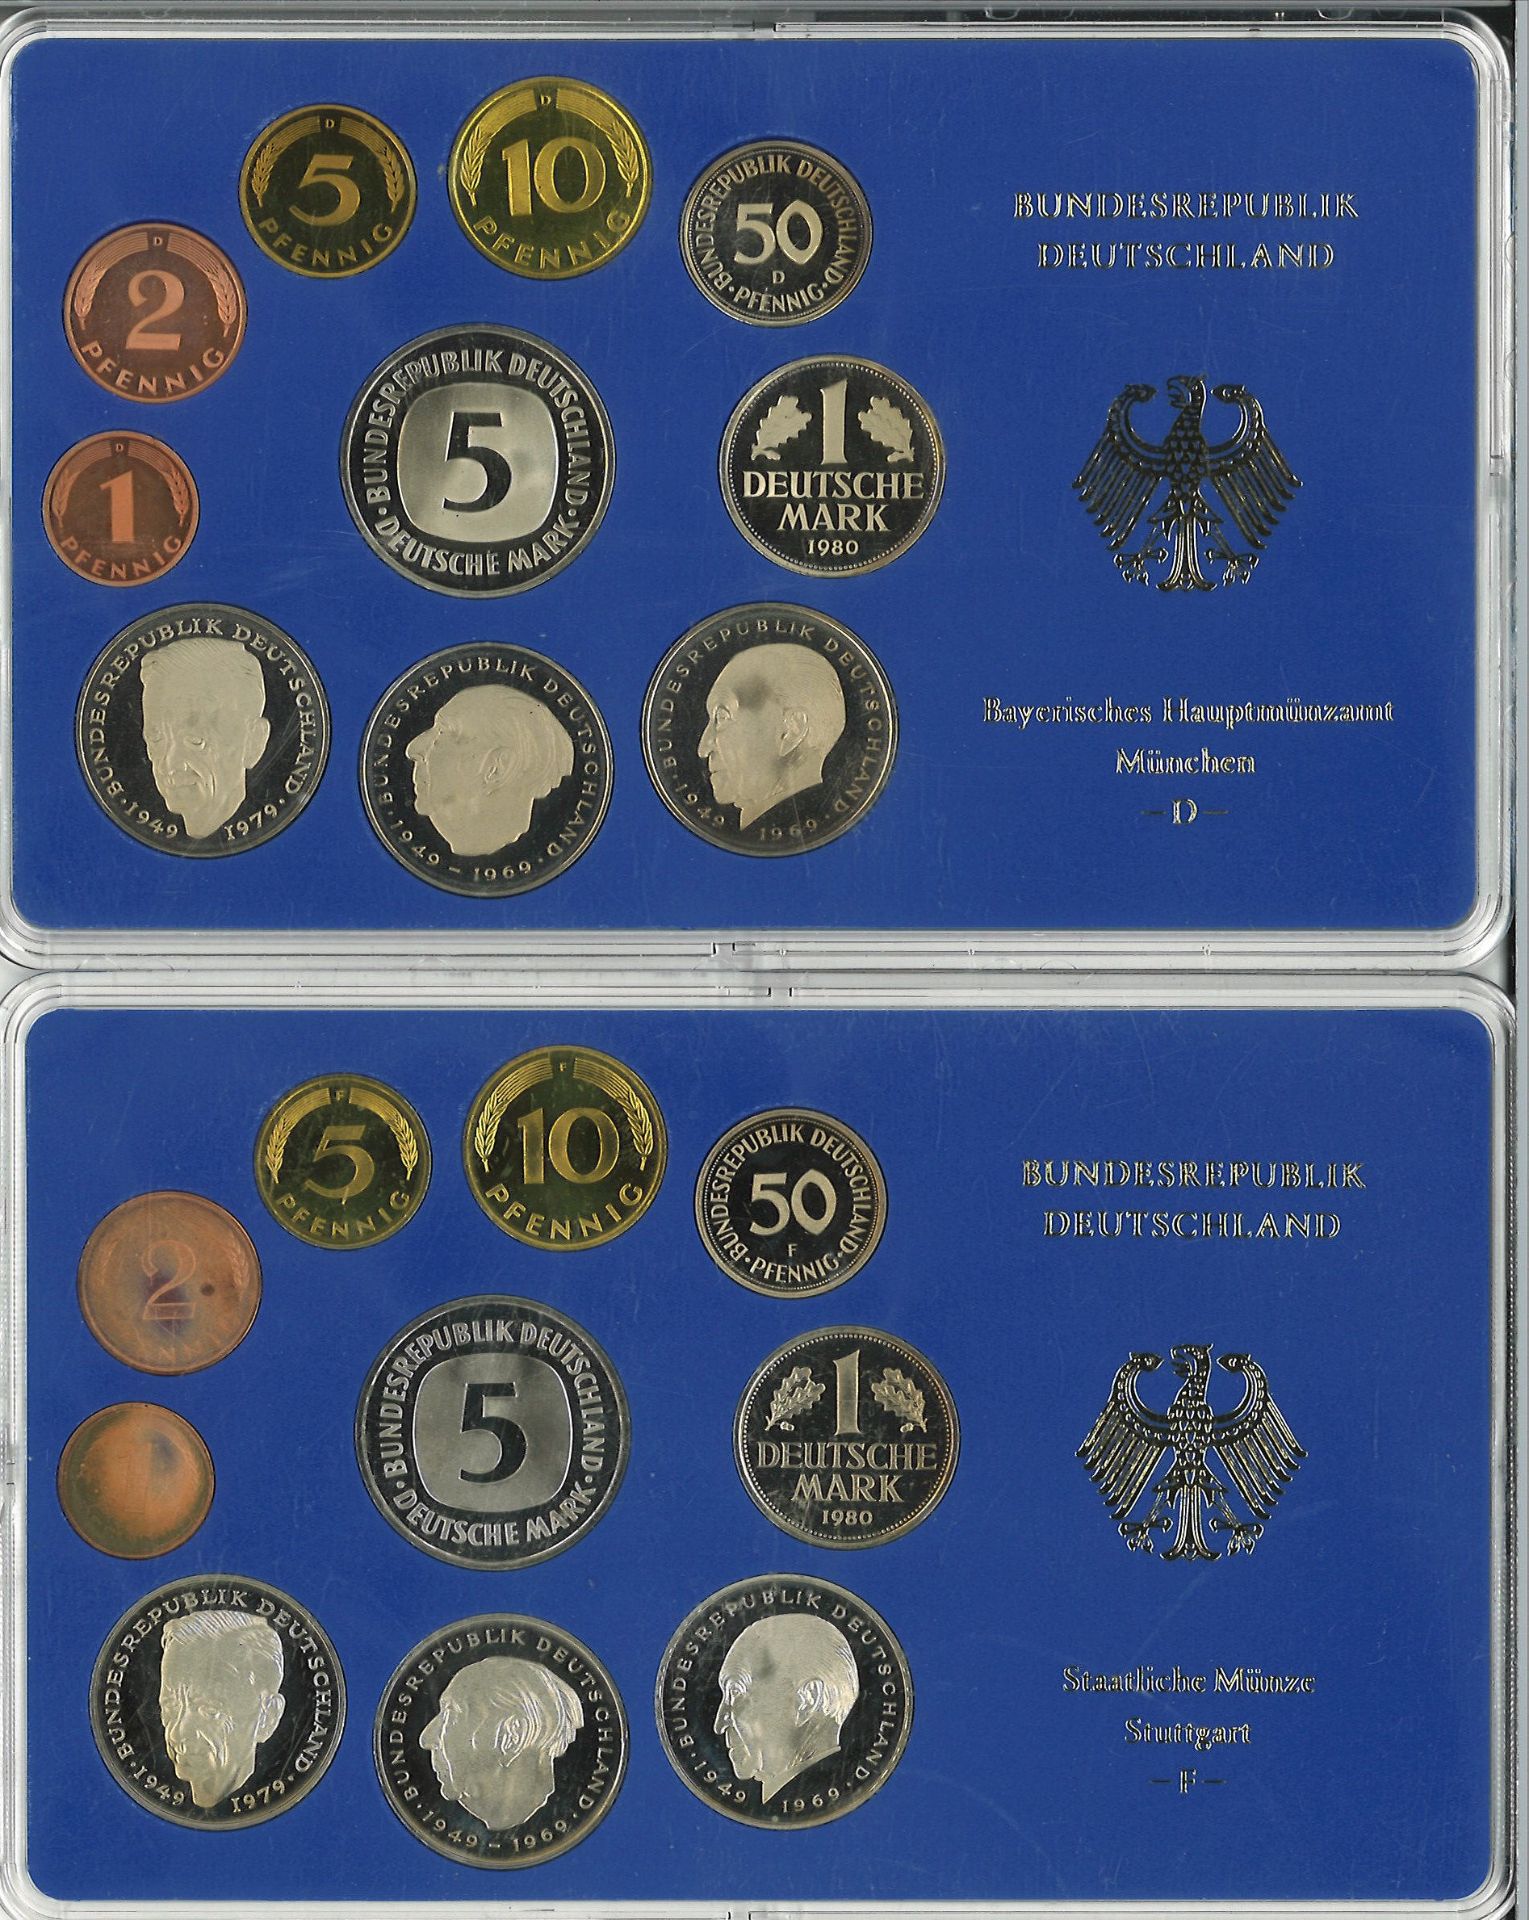 BRD Münzsets Jahrgang 1980, D, F, G und J. Im Original Blister.